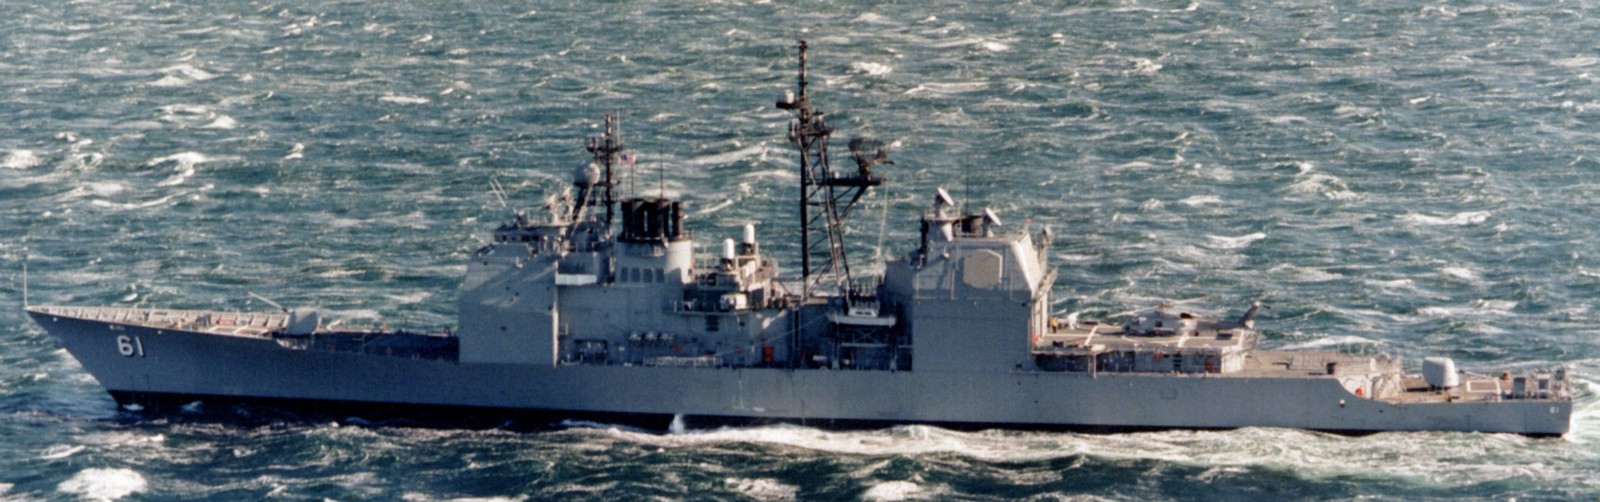 cg-61 uss monterey ticonderoga class guided missile cruiser aegis us navy 146